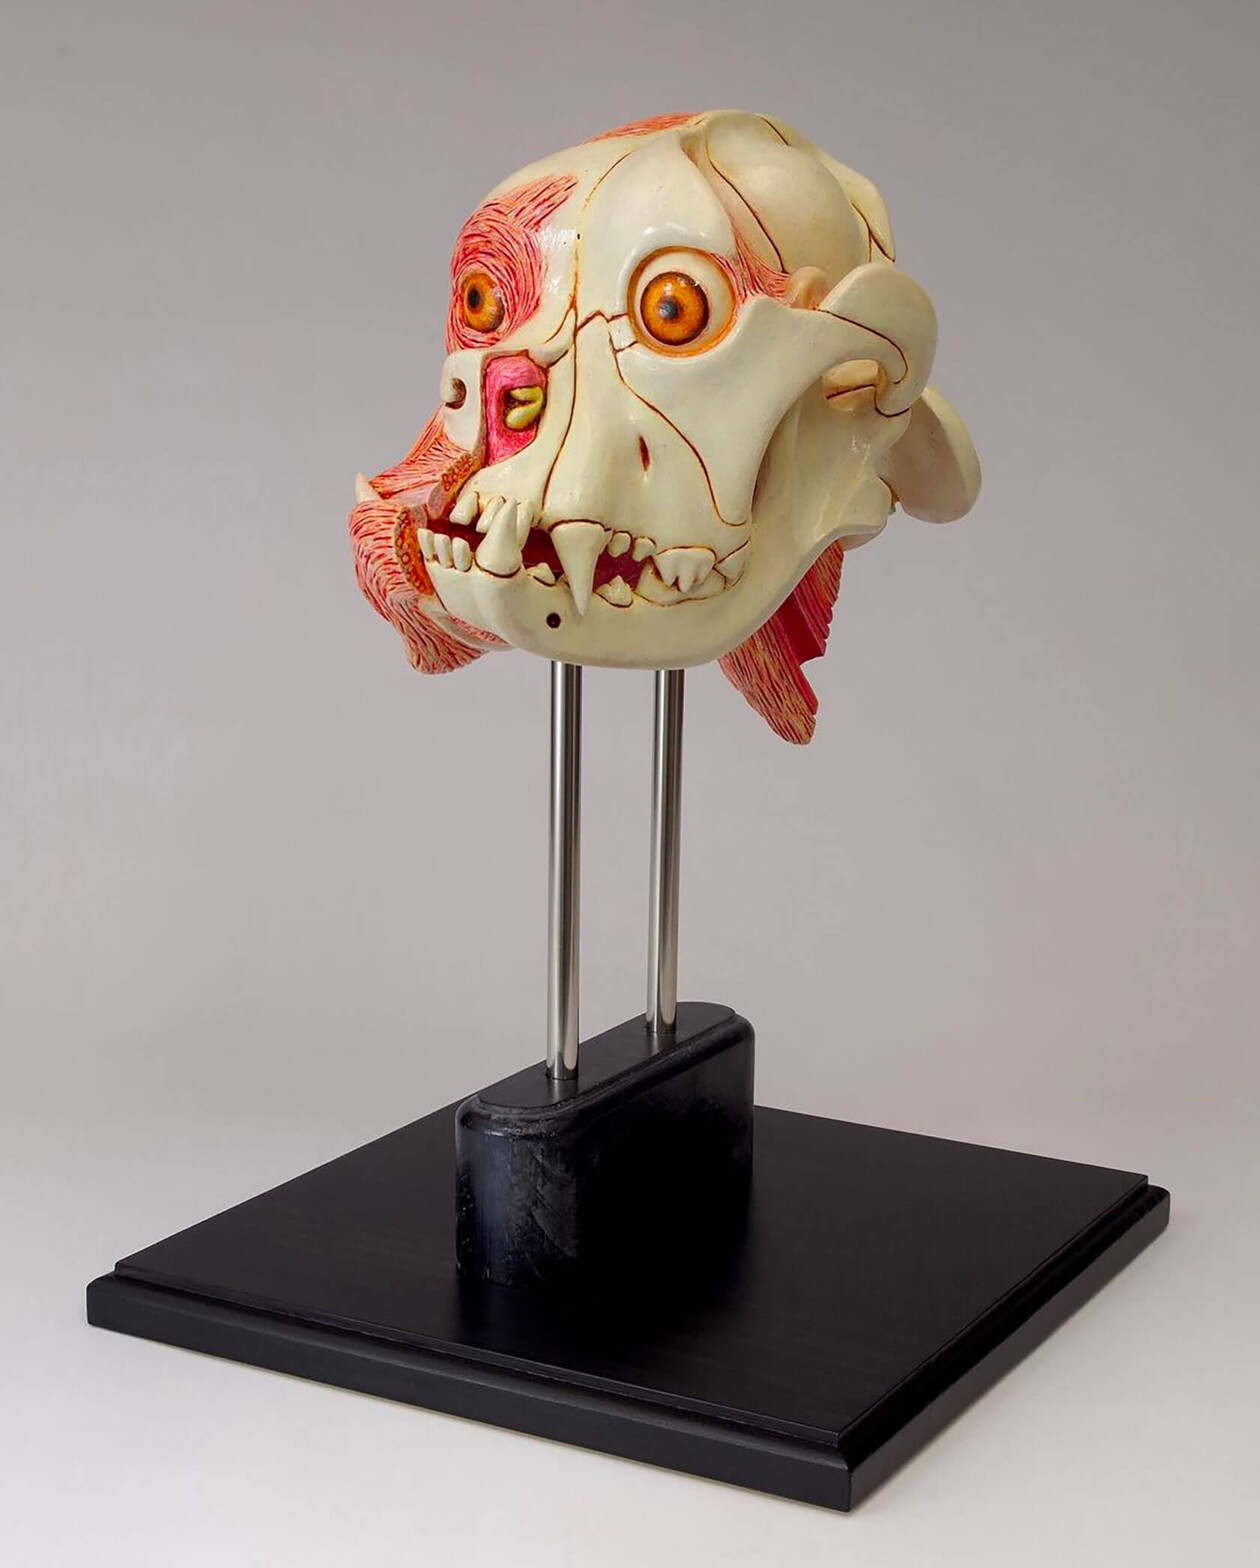 Masao Kinoshita’s Sculptures Explore Myth, Religion, And The Human Form (14)